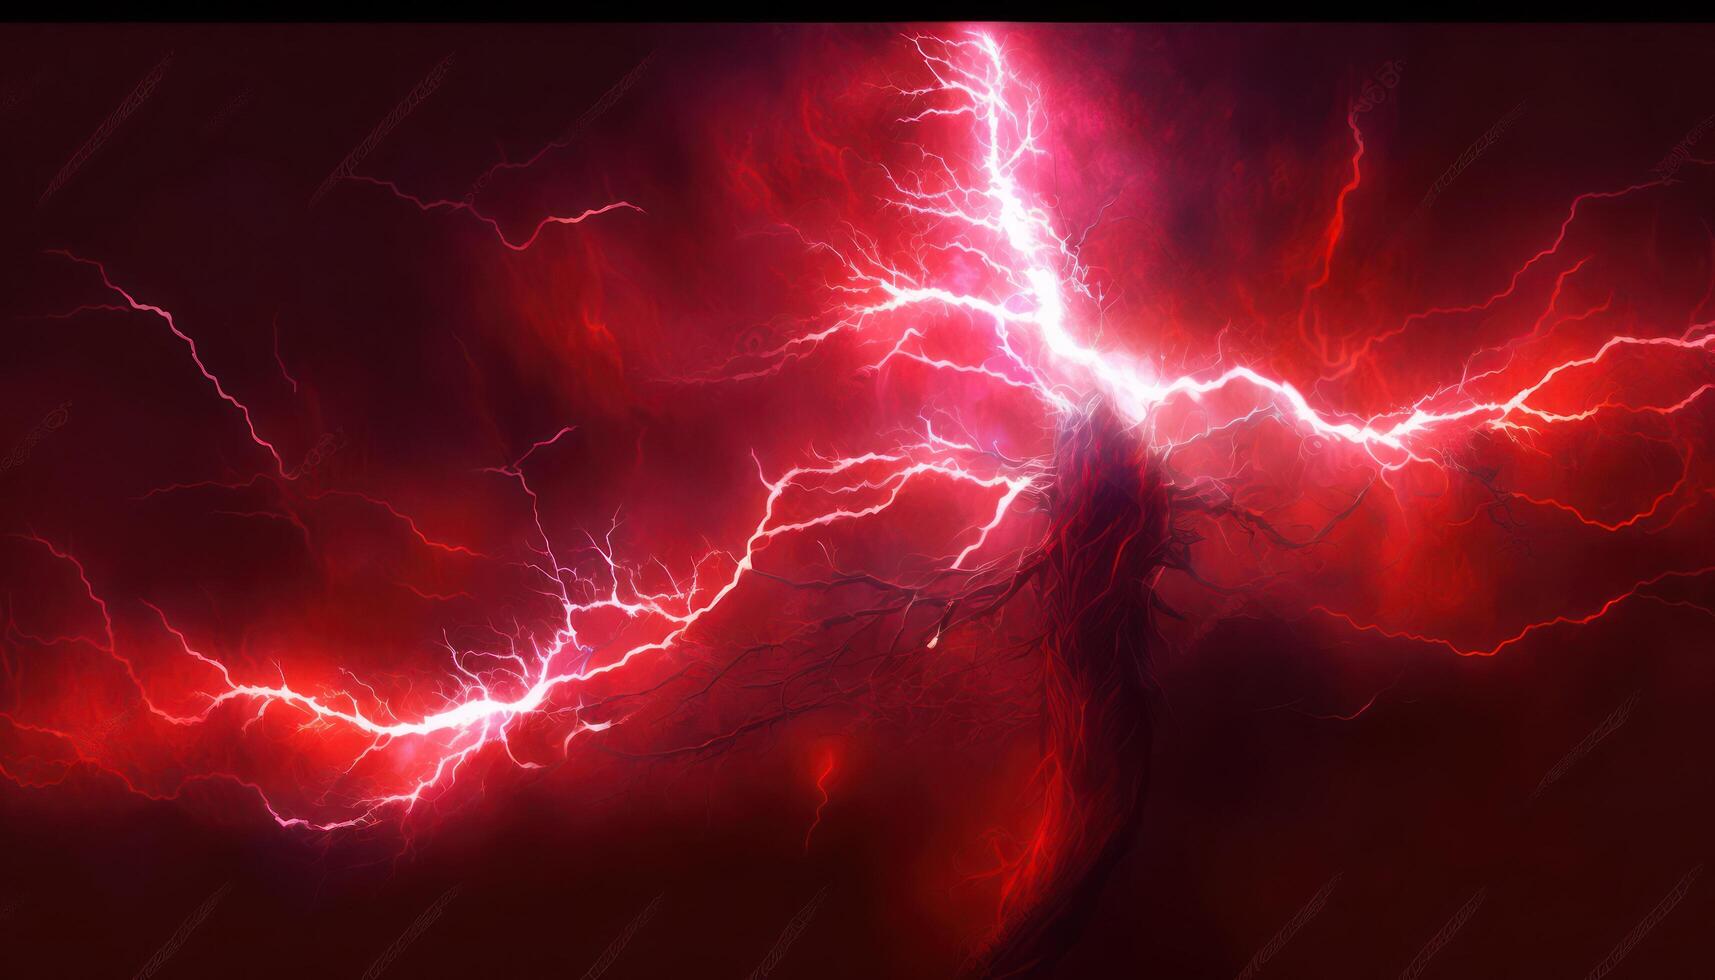 Red fantasy lightning. photo